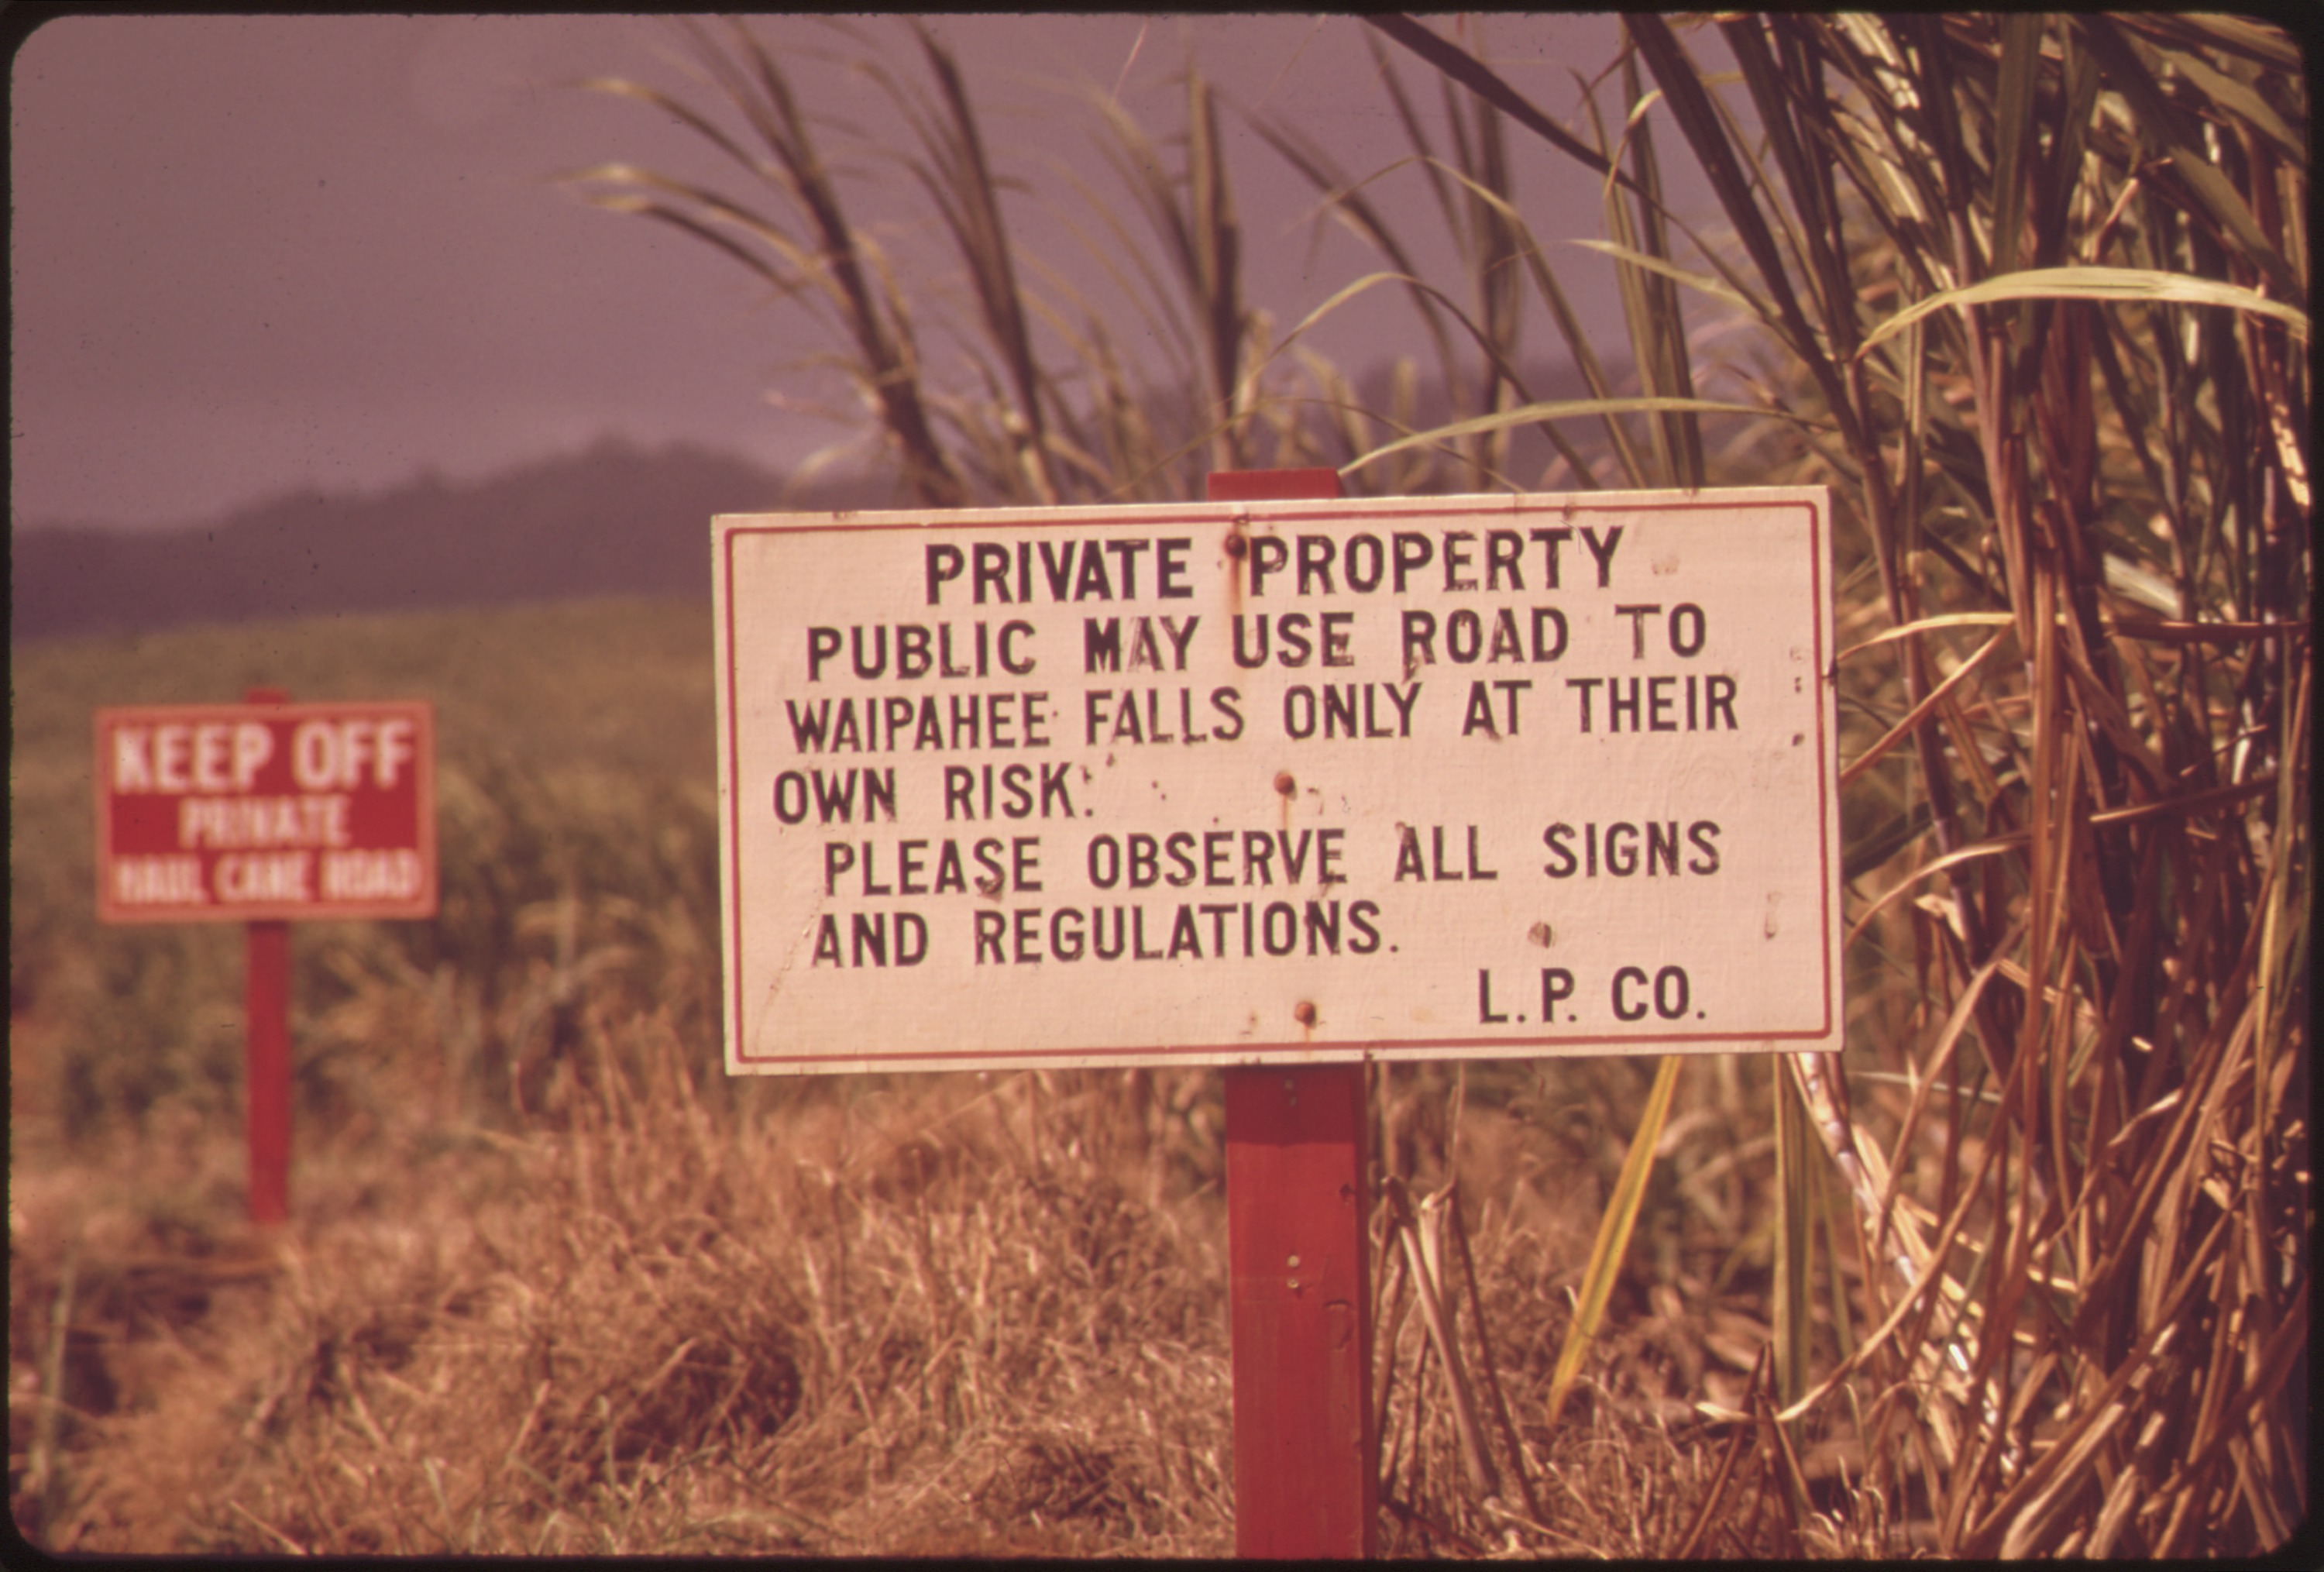 Public property private property. Private property. The right to private property. Public property